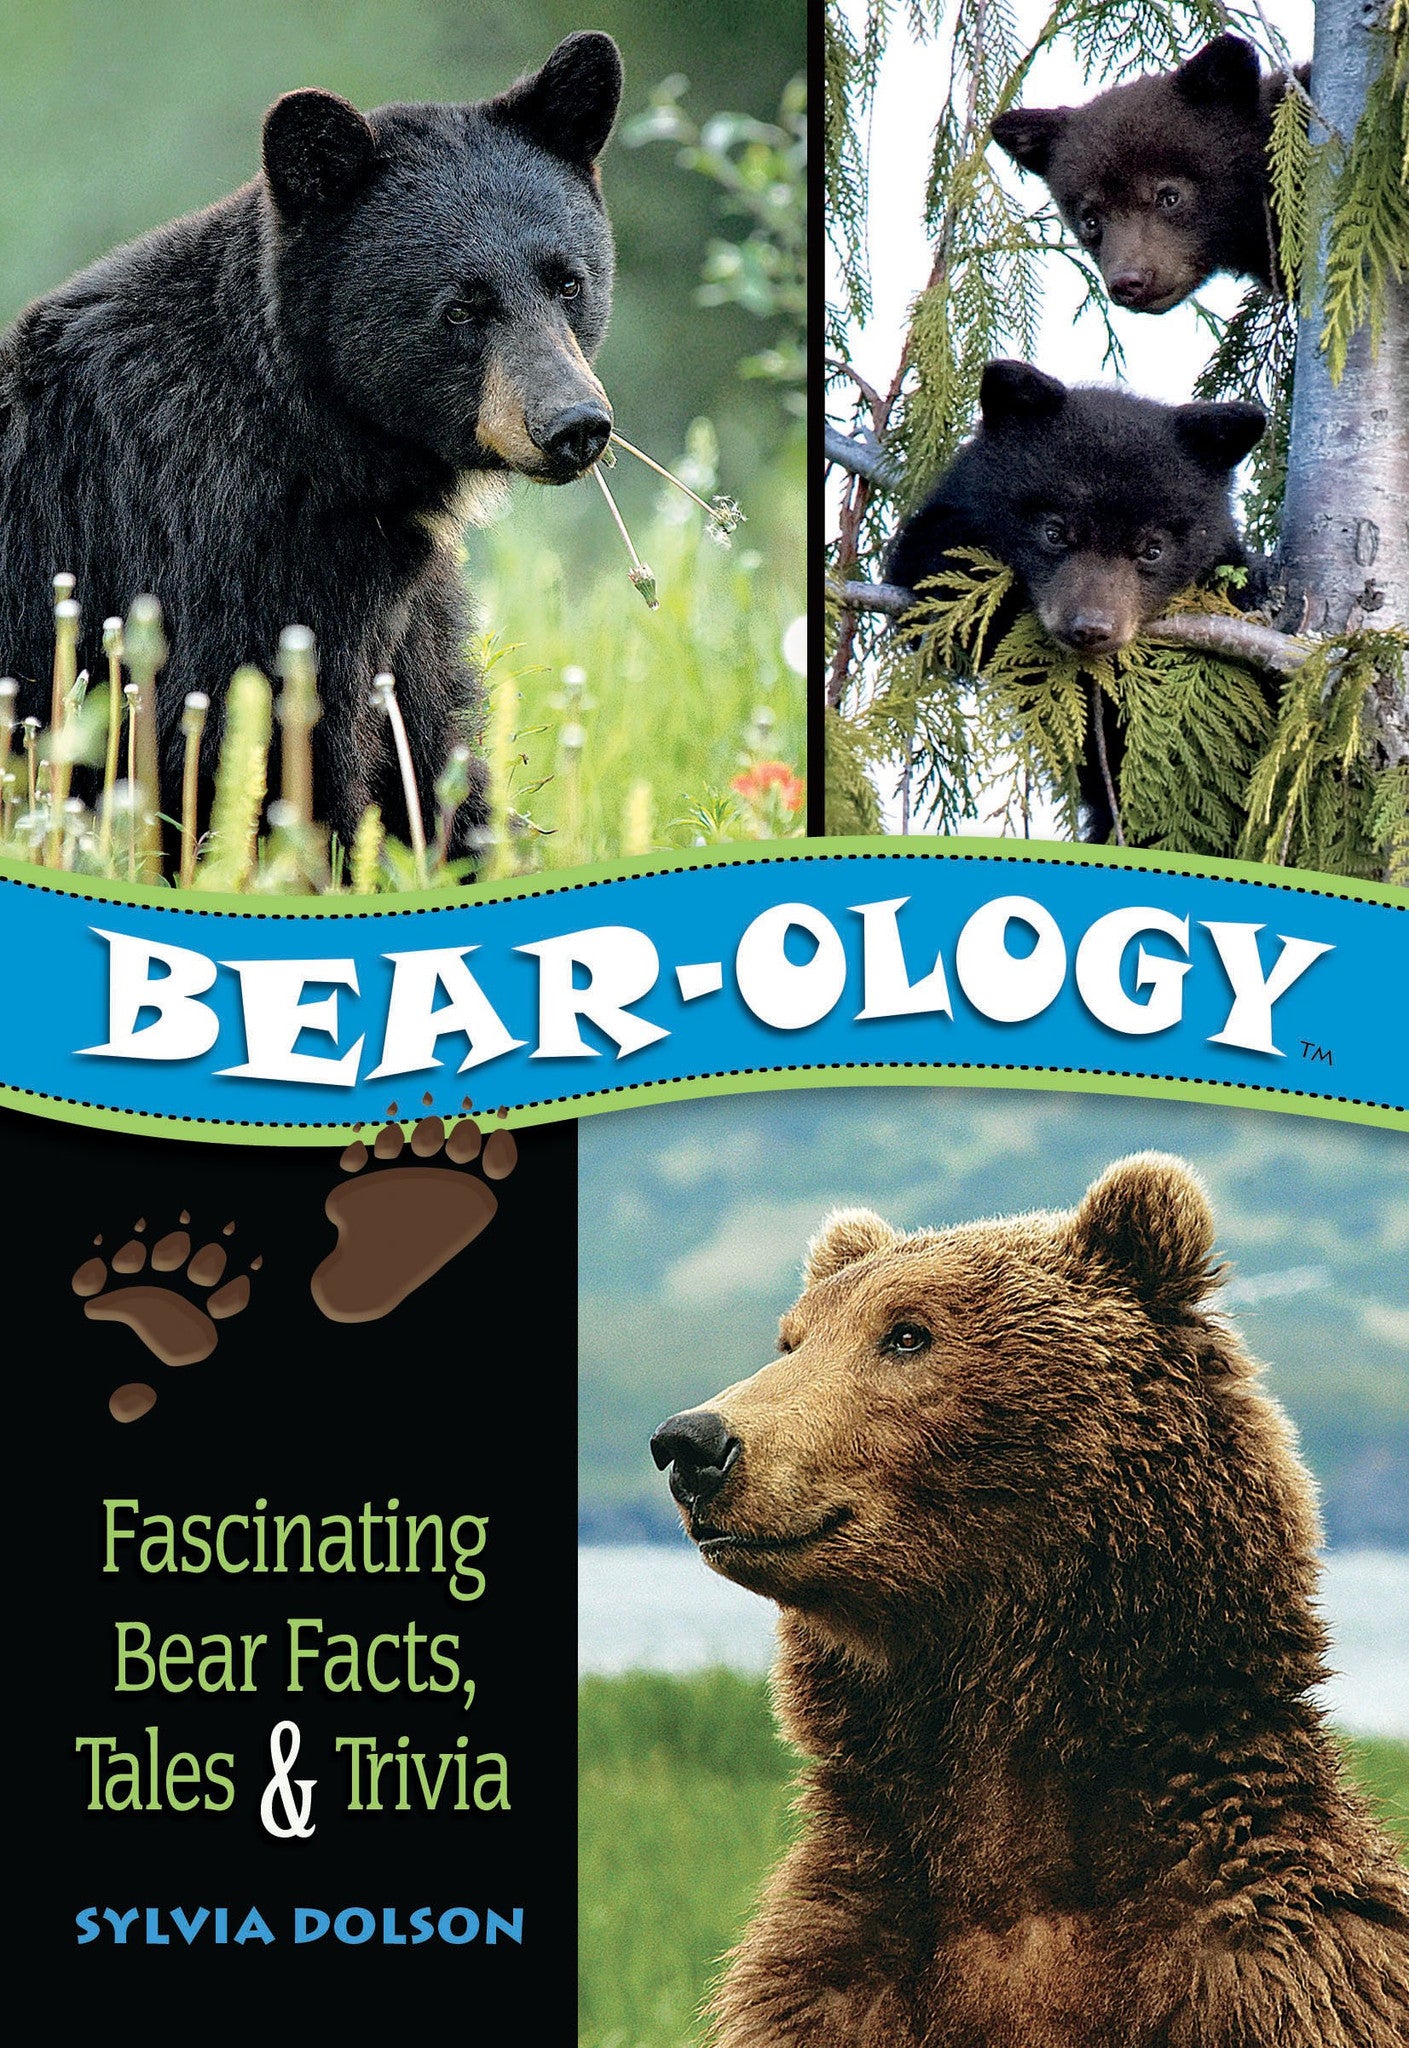 Bear-ology: Fascinating Bear Facts, Tales & Trivia by Sylvia Dolson